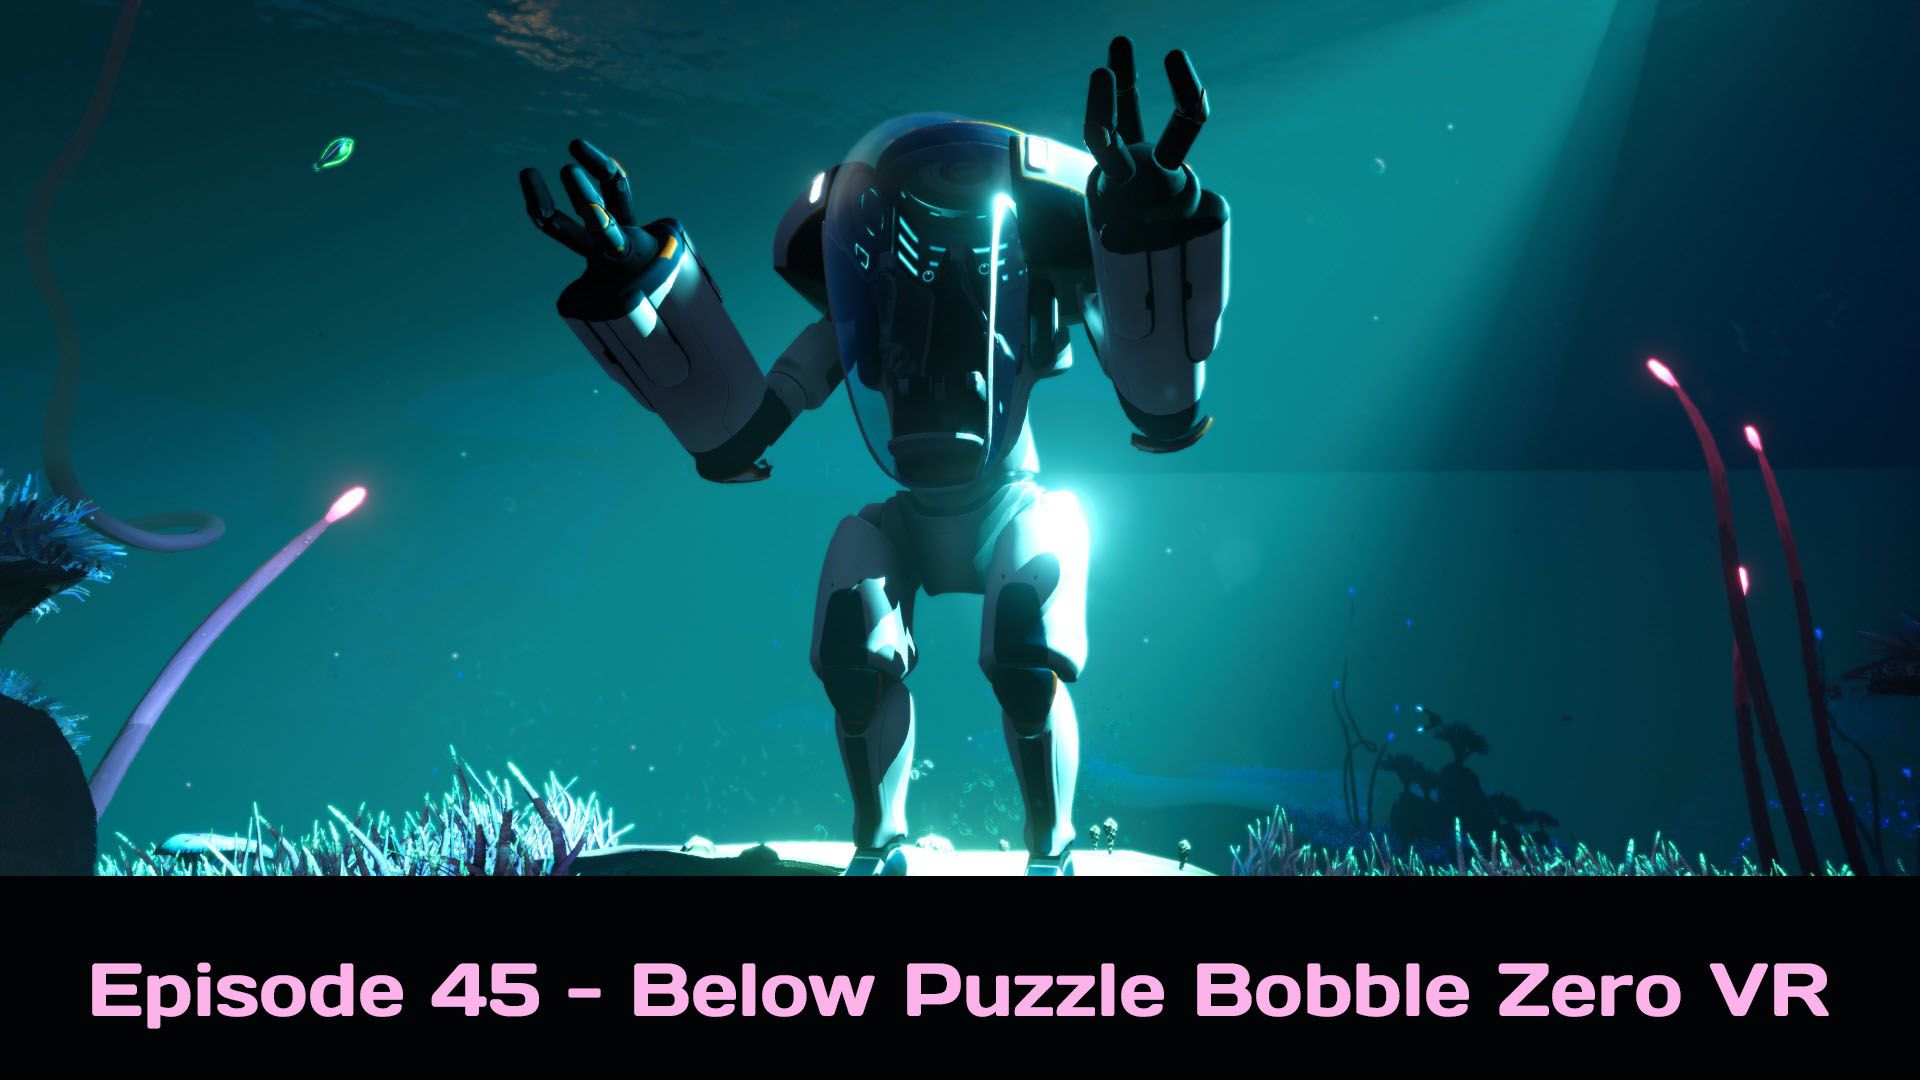 Episode 45 - Below Puzzle Bobble Zero VR